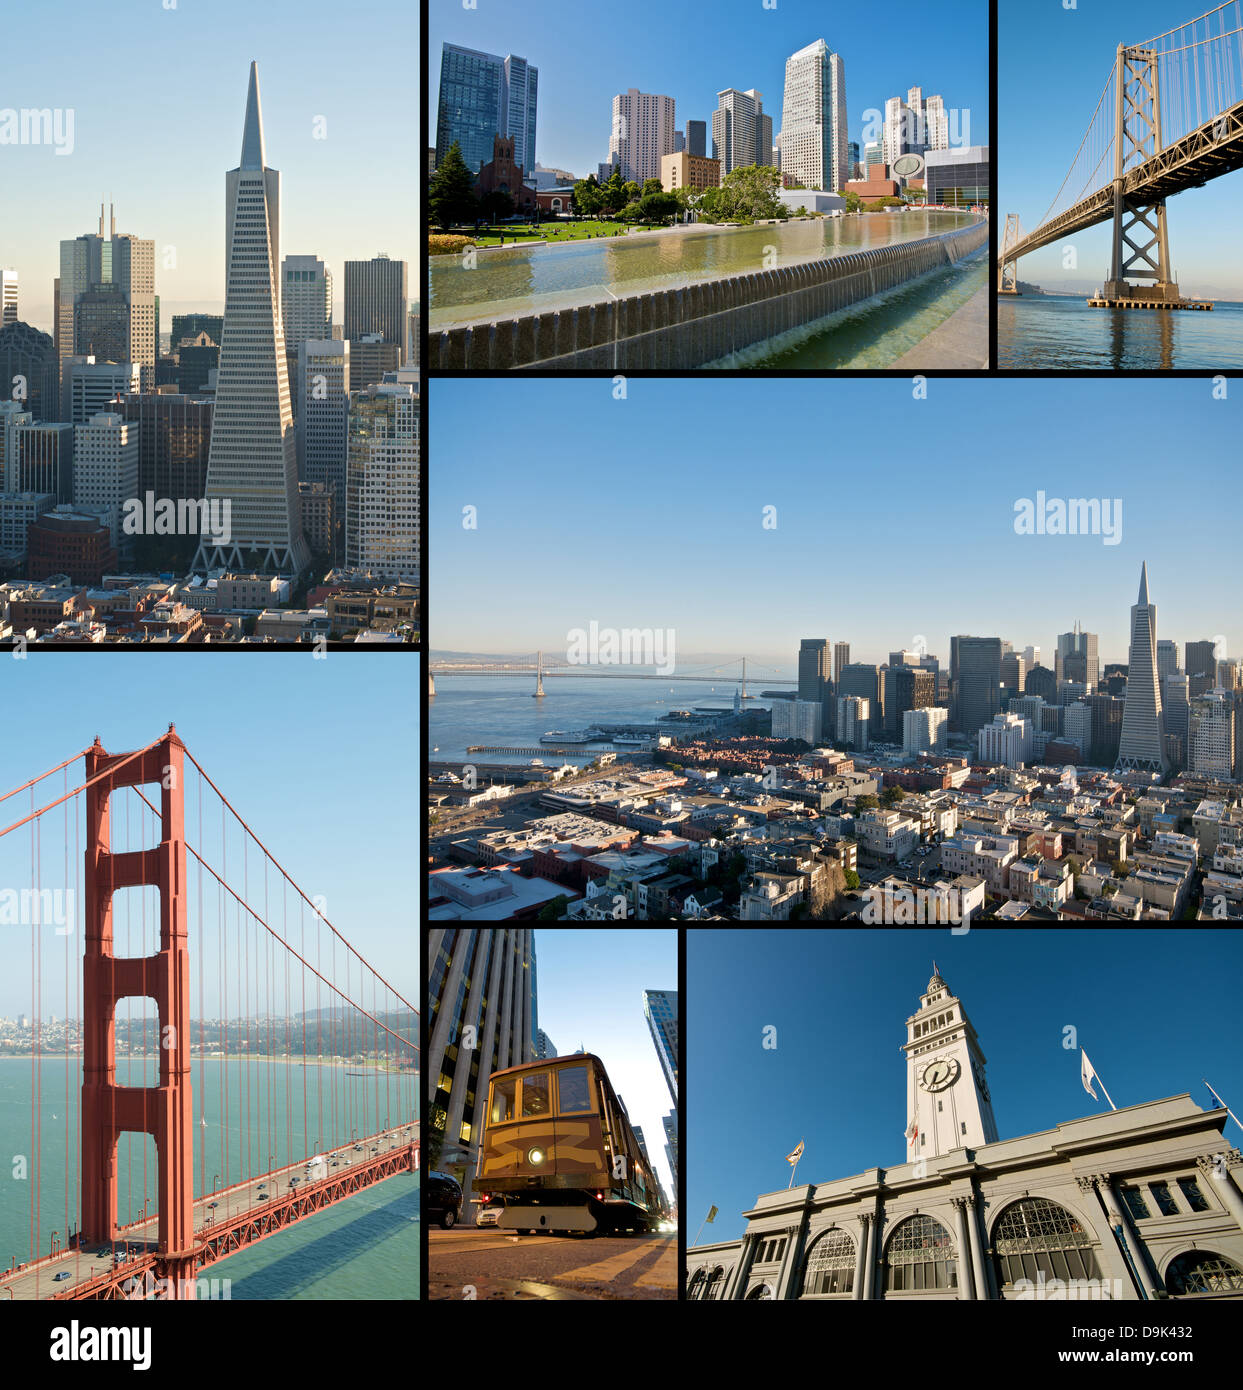 San Francisco Landmark collage Stock Photo